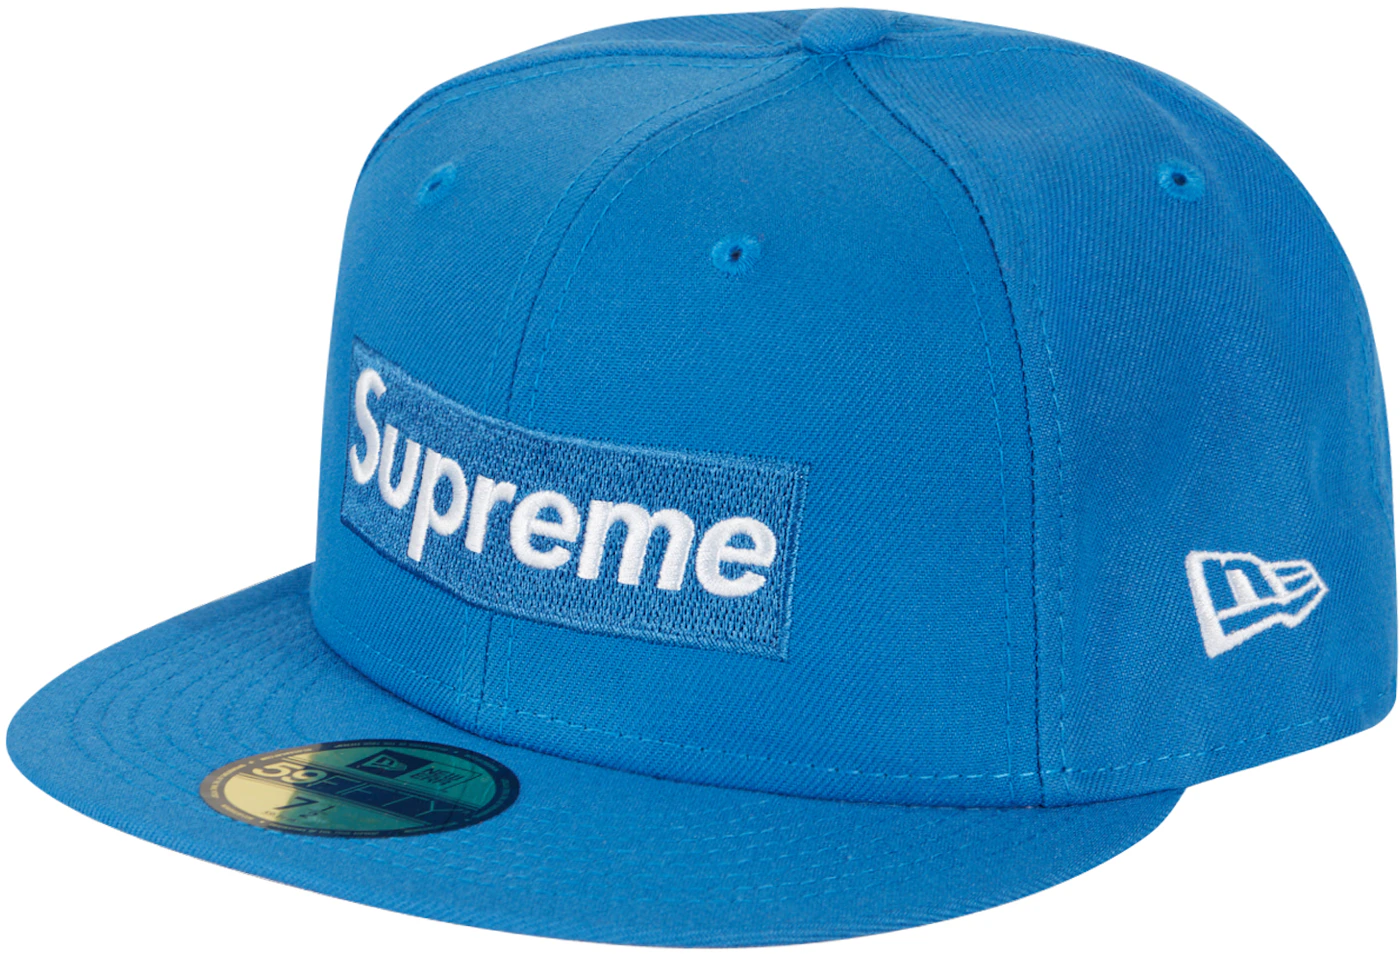 Box logo hat Supreme Blue size 22.2 Inches in Cotton - 30466962